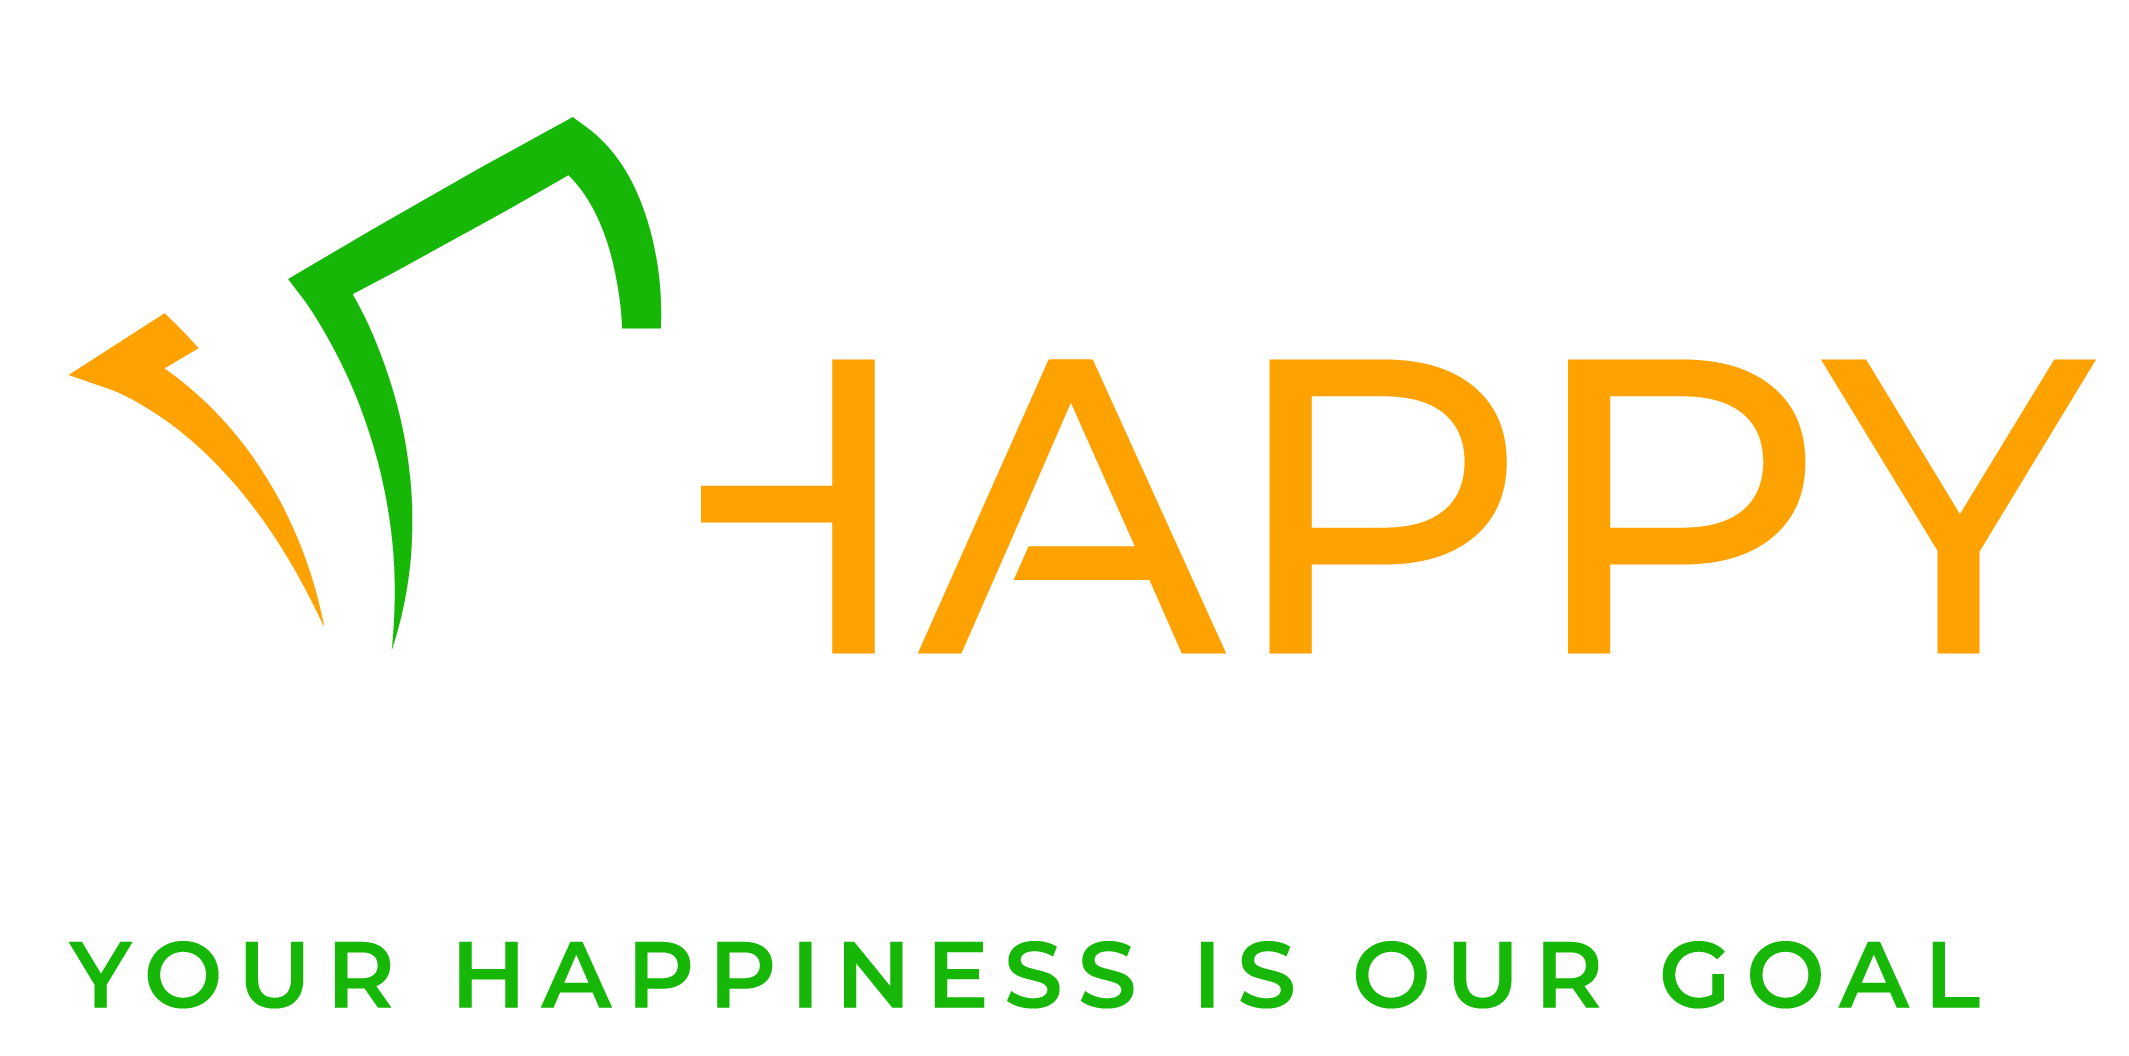 HAPPY NIVESHAK